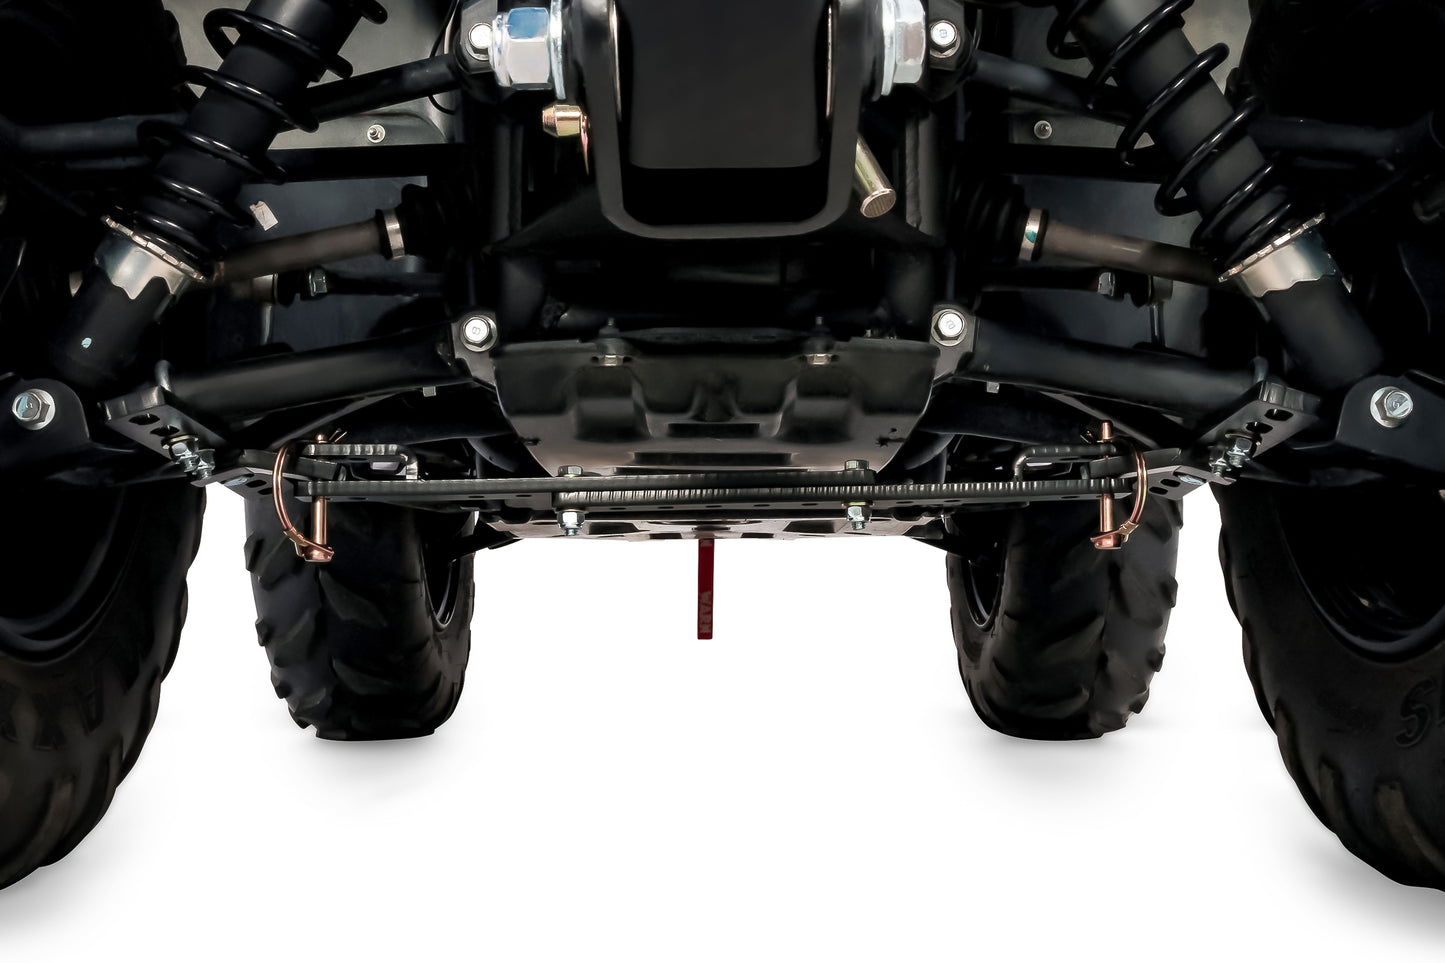 Black Boar ATV Suspension Lock